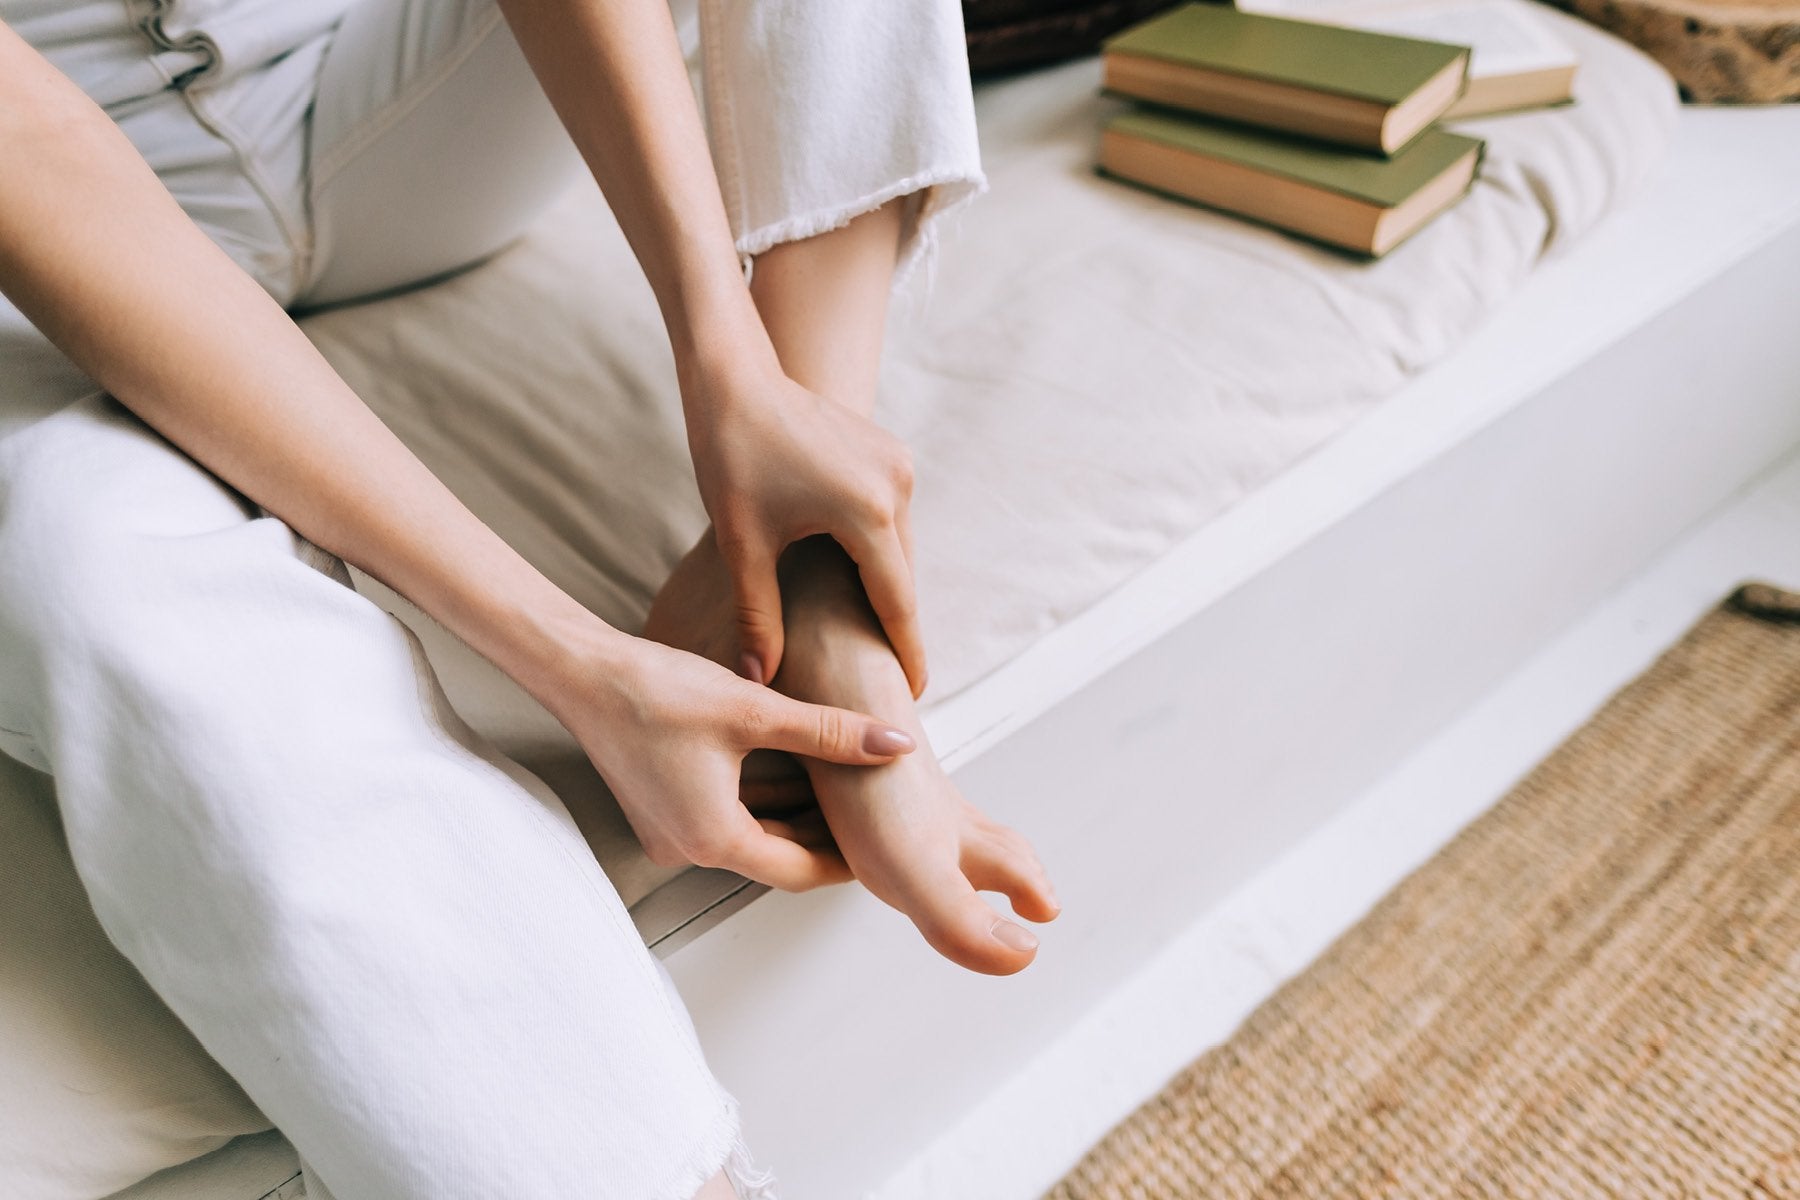 Plantar fasciitis massage: How to, massage tools, and self-massage